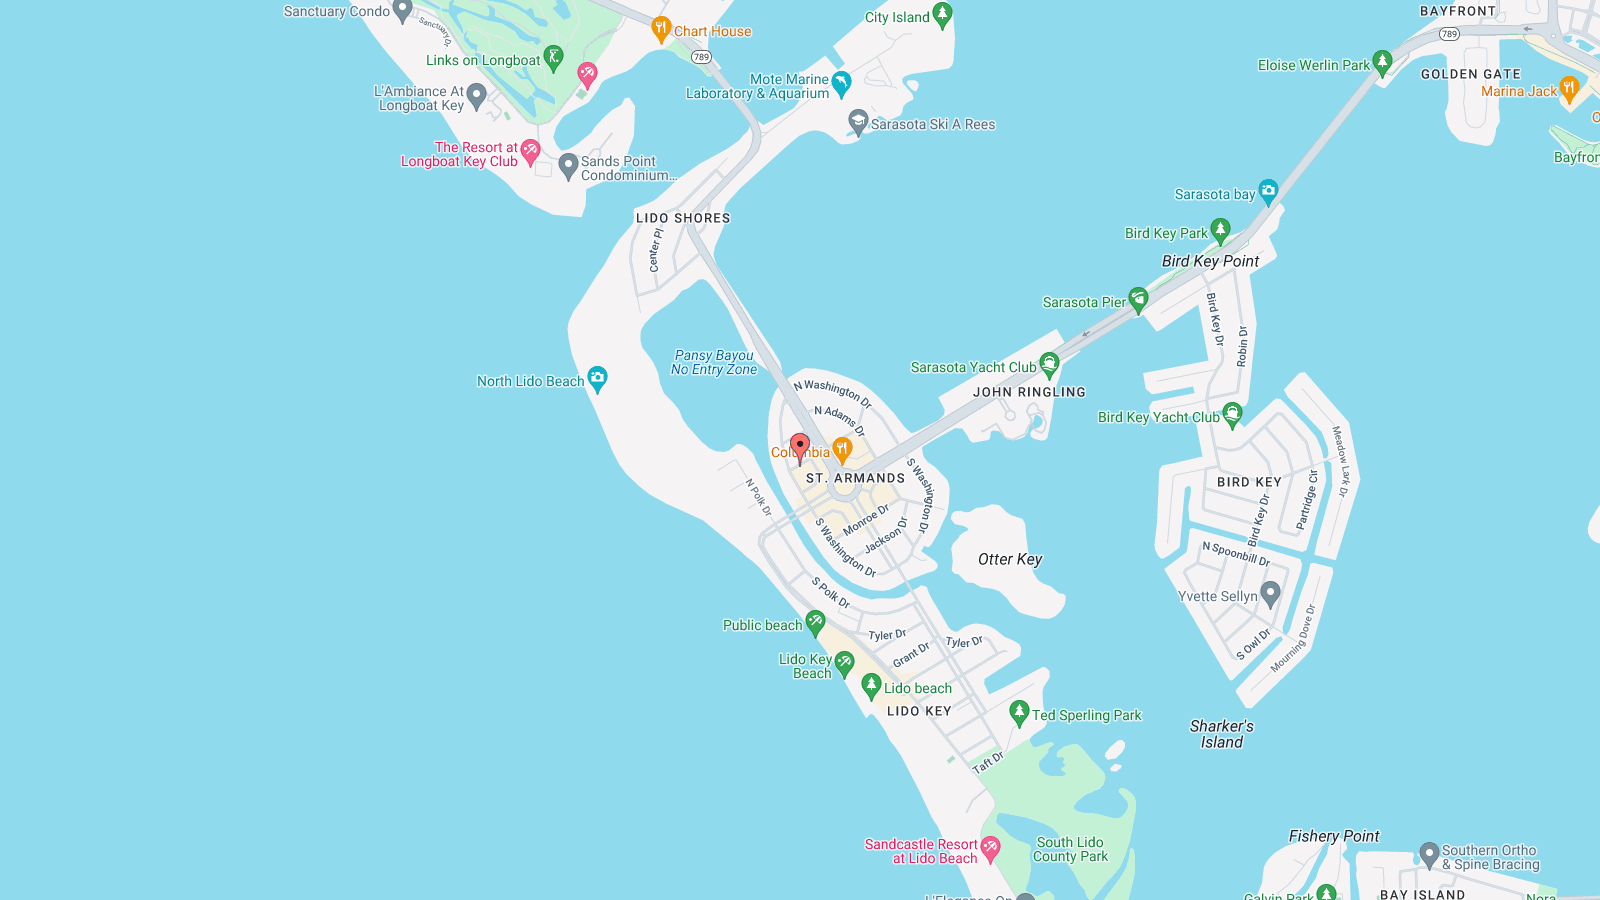 35 Saint Armands Circle Map - Maps Database Source